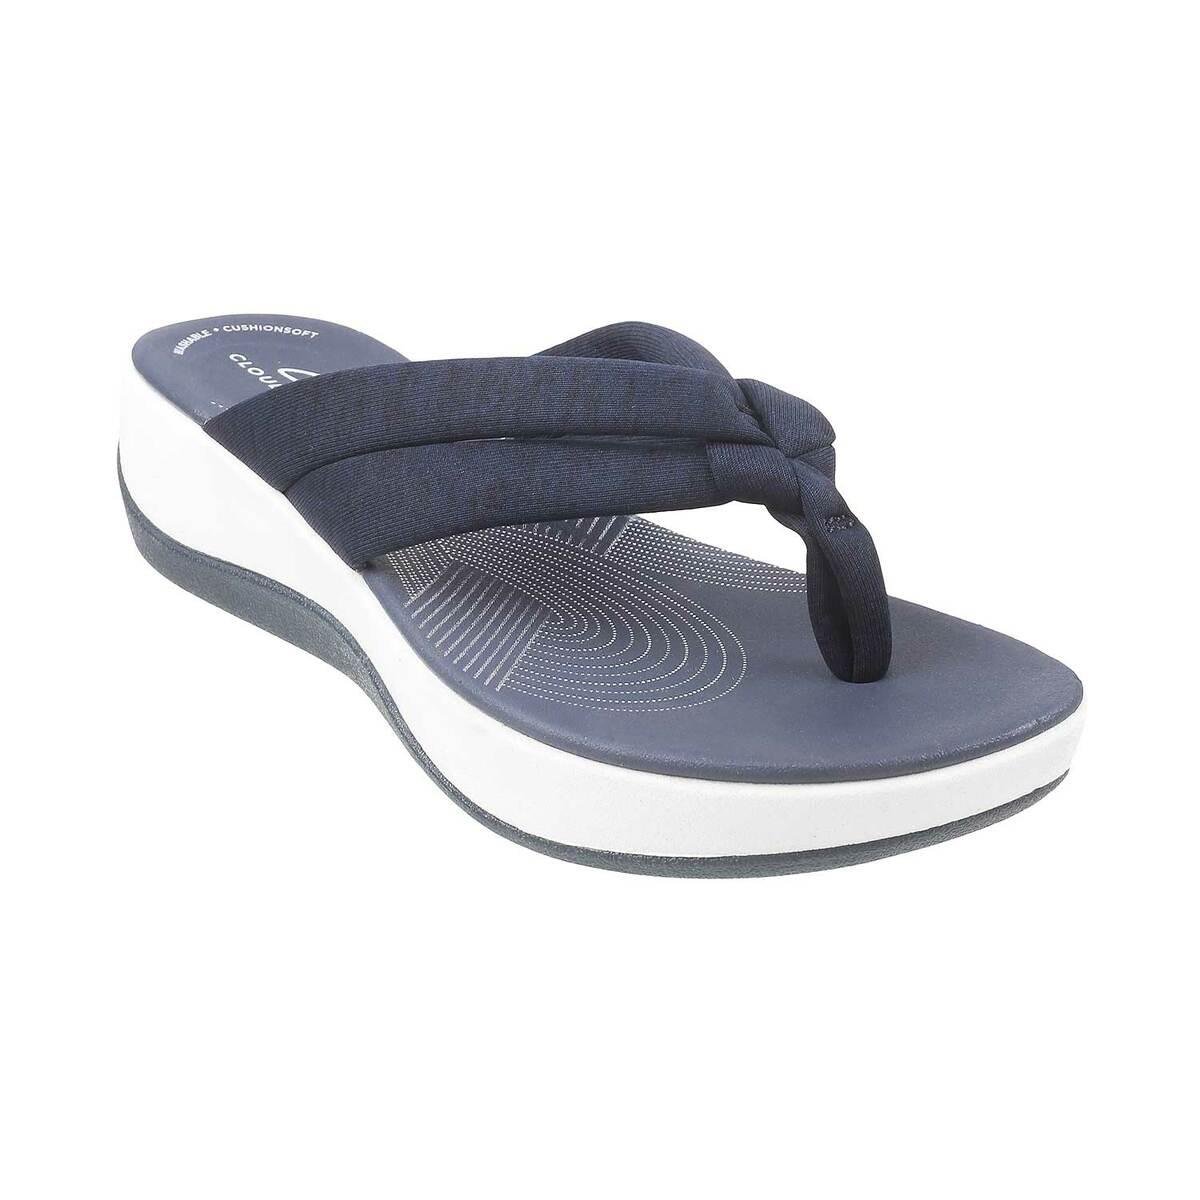 Clarks womens Arla Elin Slide Sandal, Sand/Off White Striped Textile, 9 US  | Clarks women's, Slide sandals, Womens fashion shoes